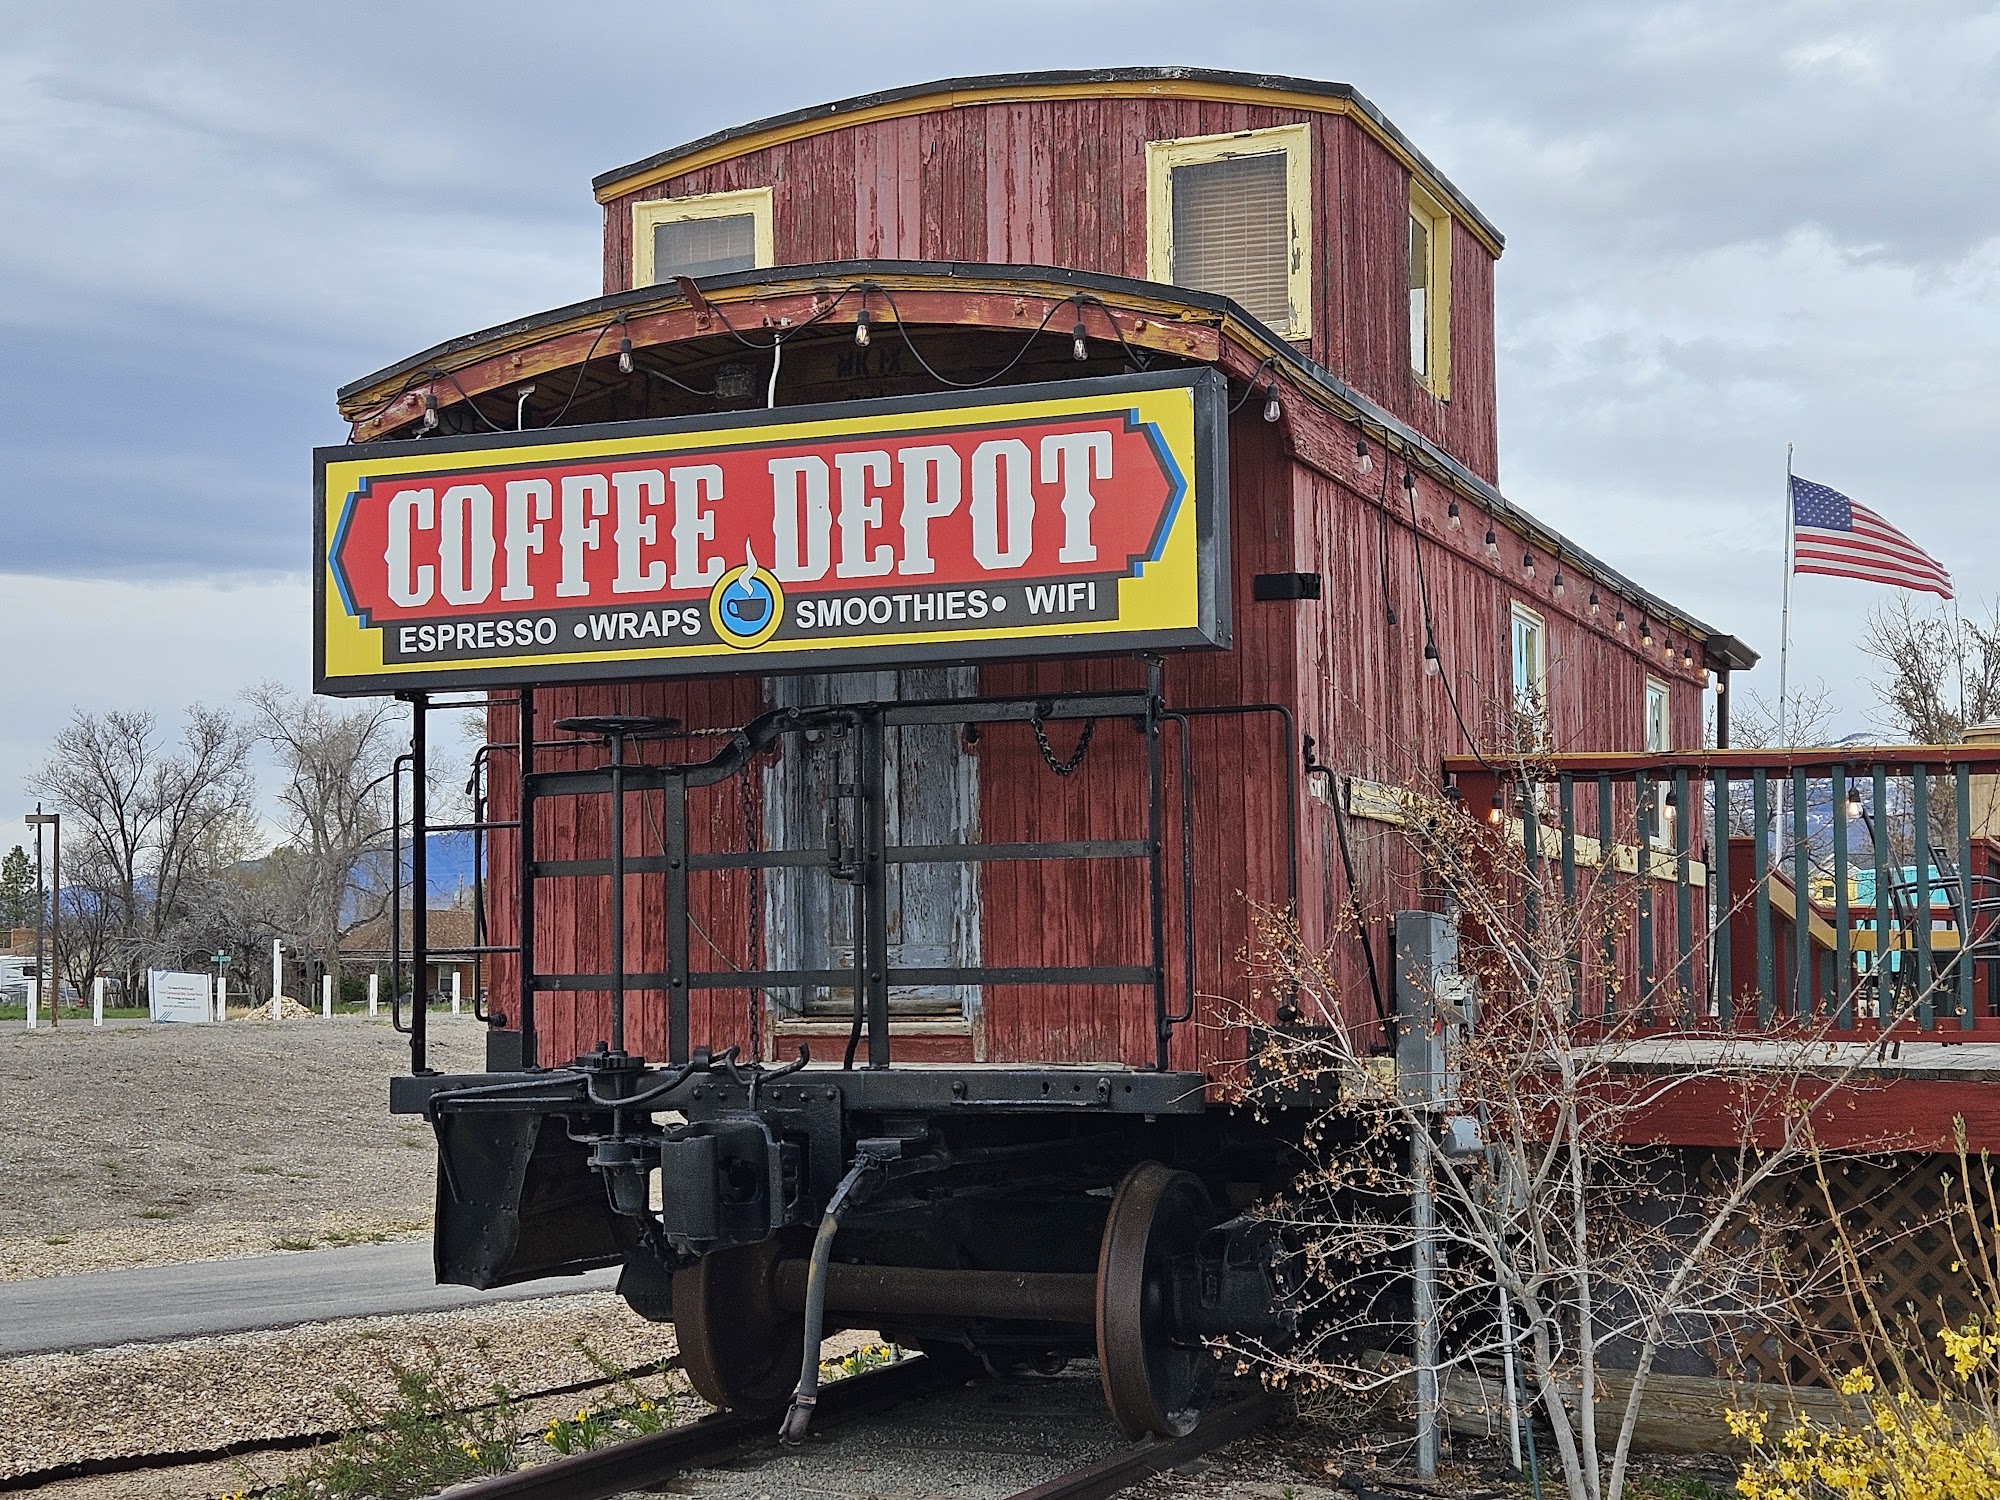 Coffee Depot